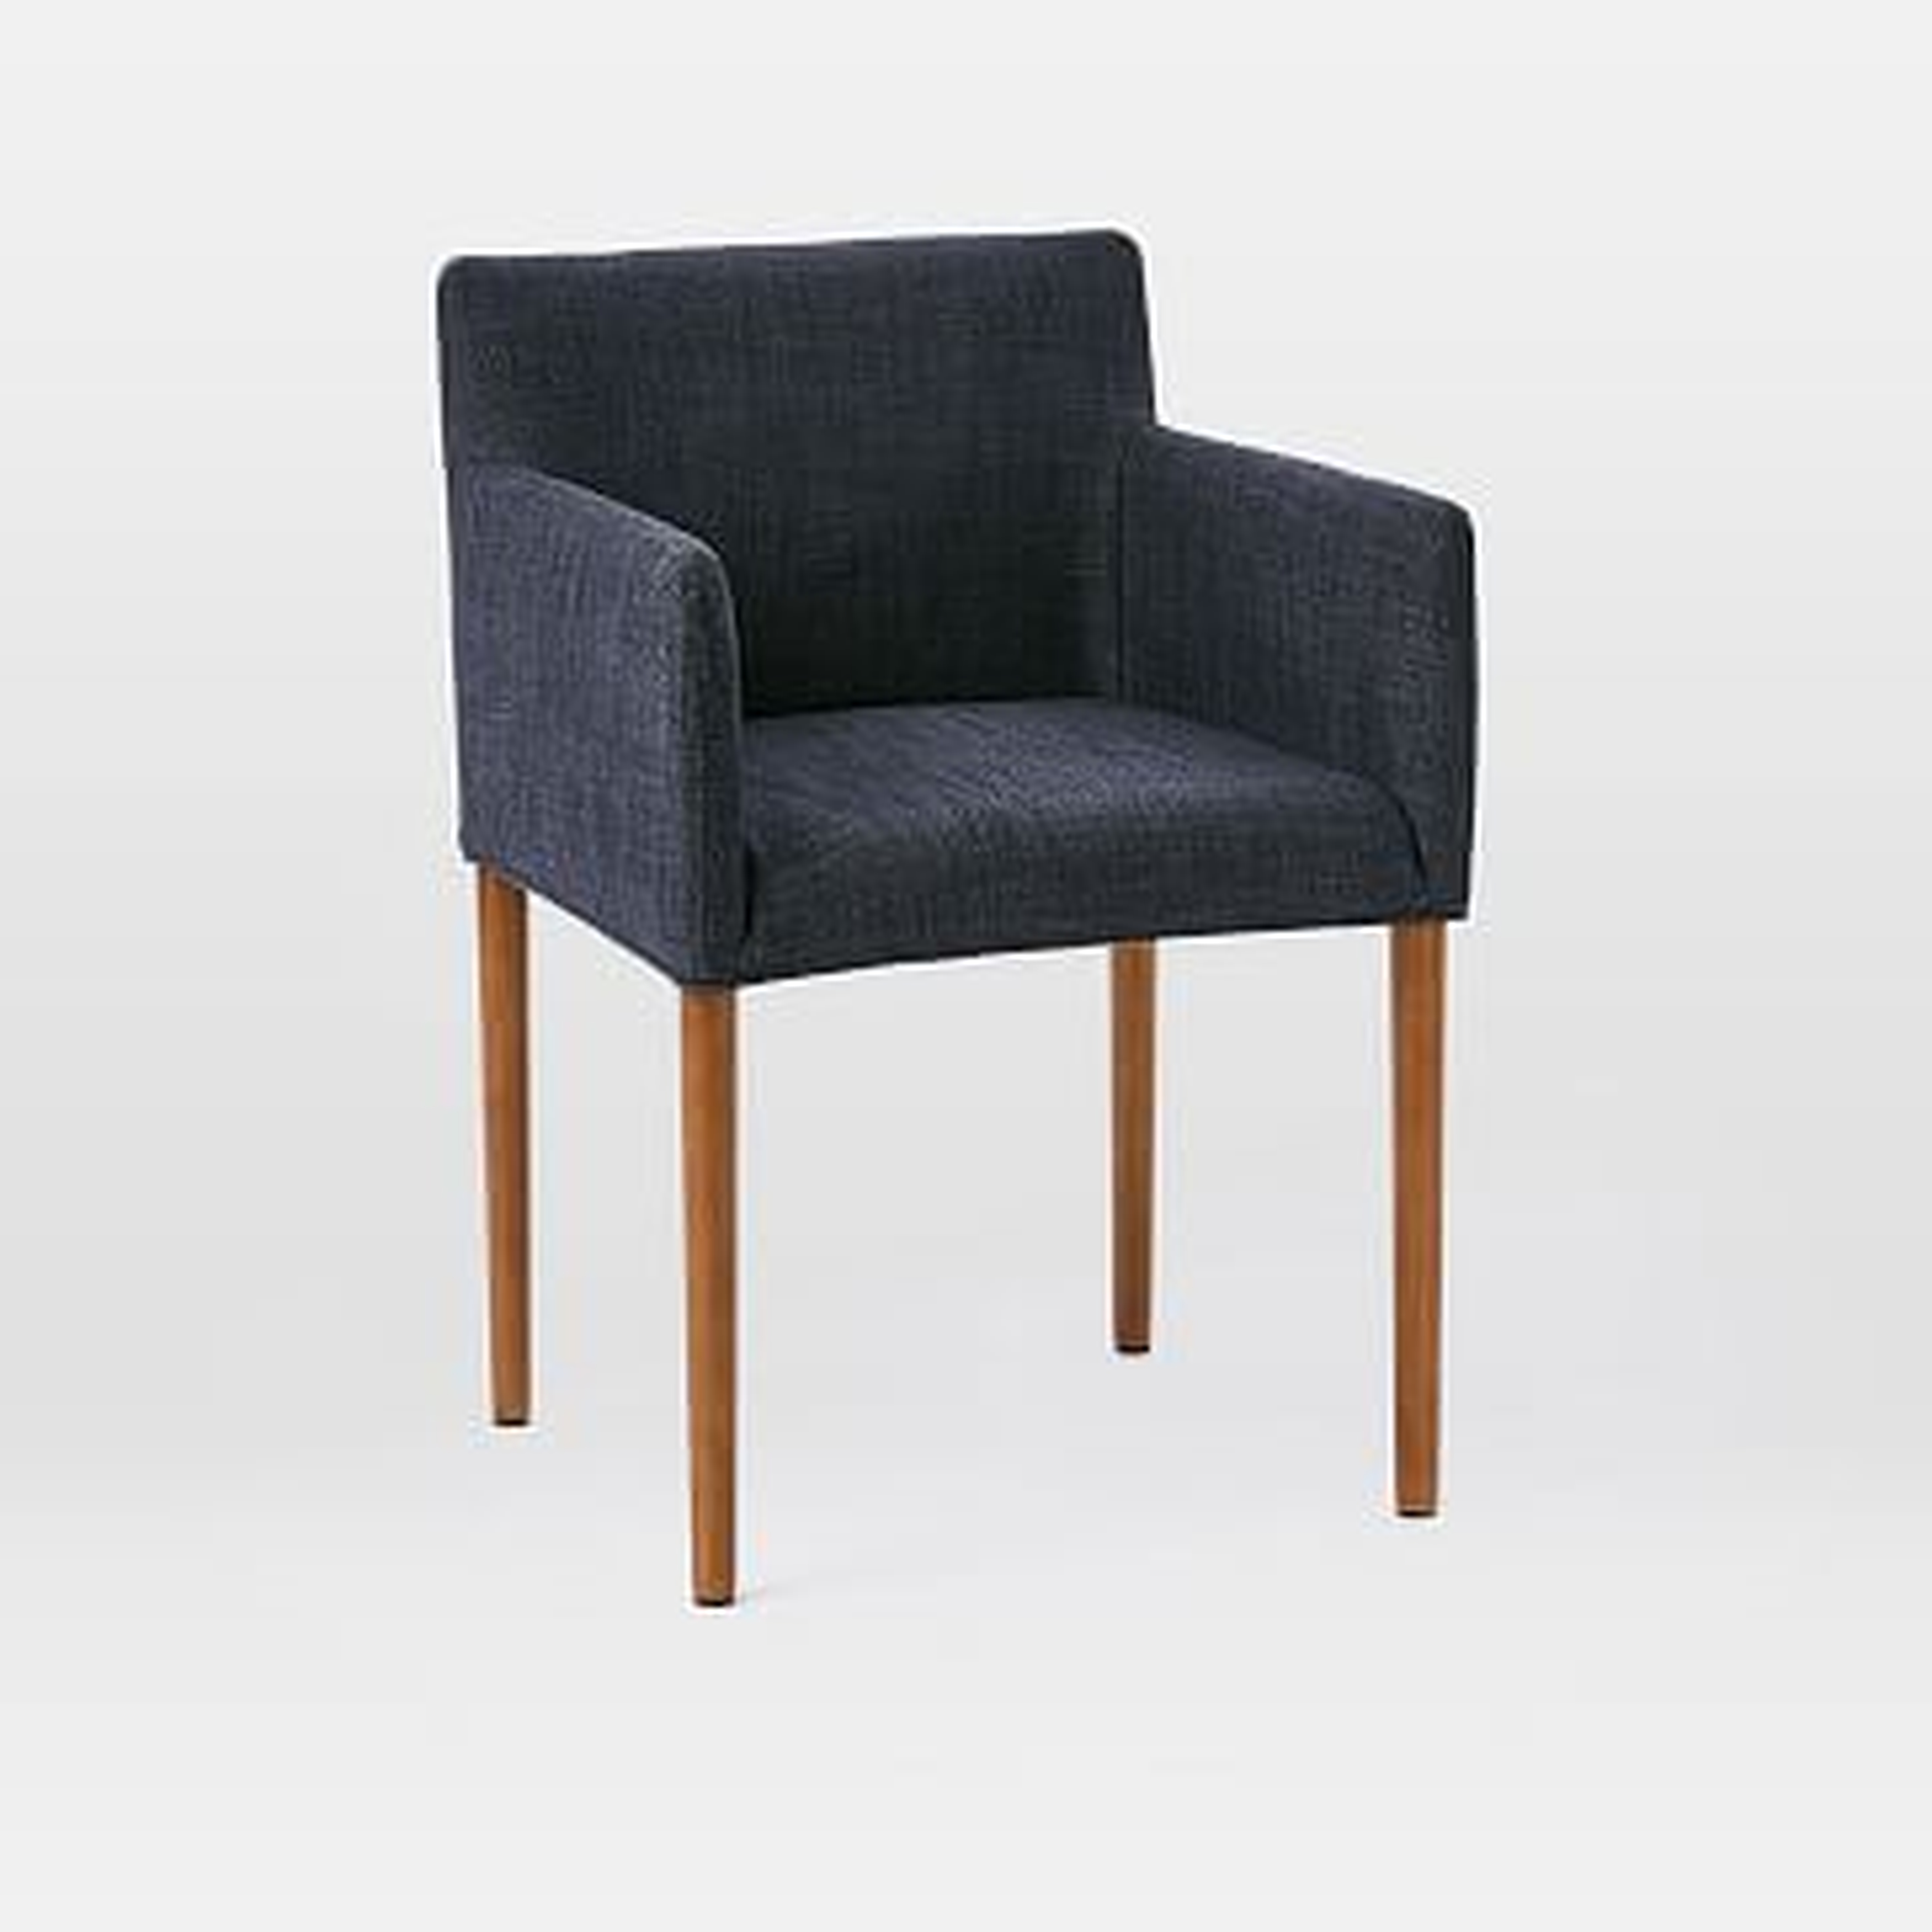 Ellis Upholstered Arm Chair, Yarn Dyed Linen Weave, Indigo, Pecan - West Elm